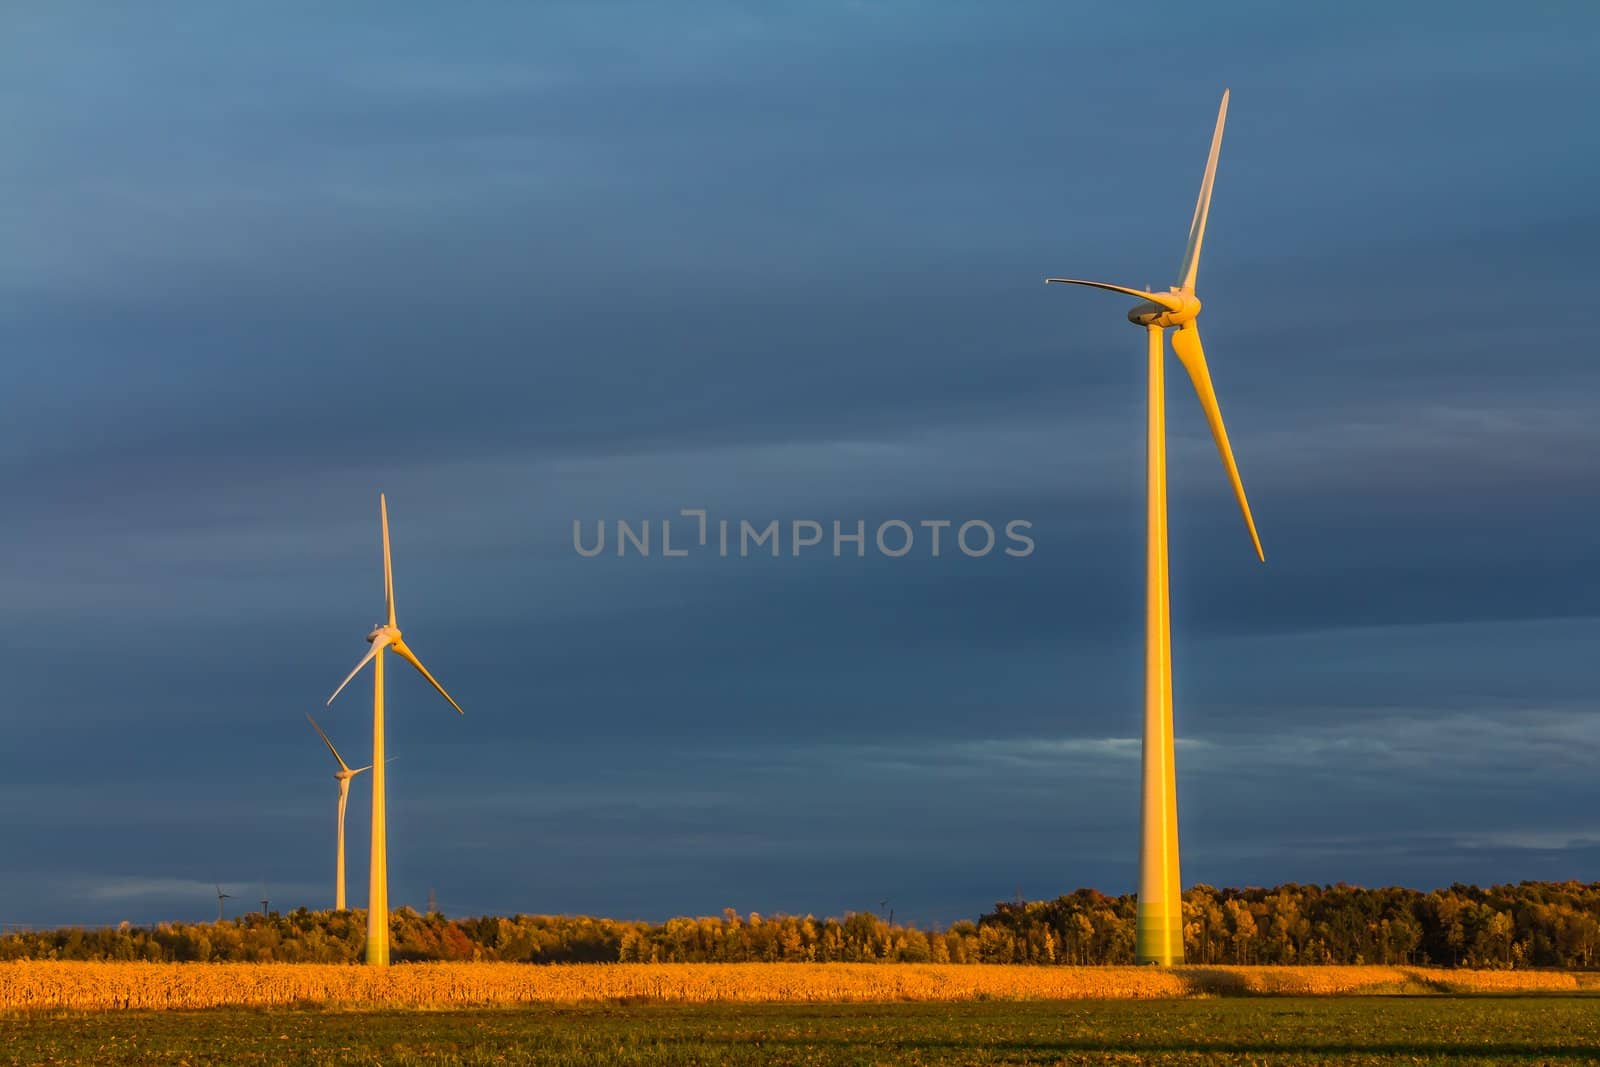 Wind turbine in a field in the evening, producing wind, Canada